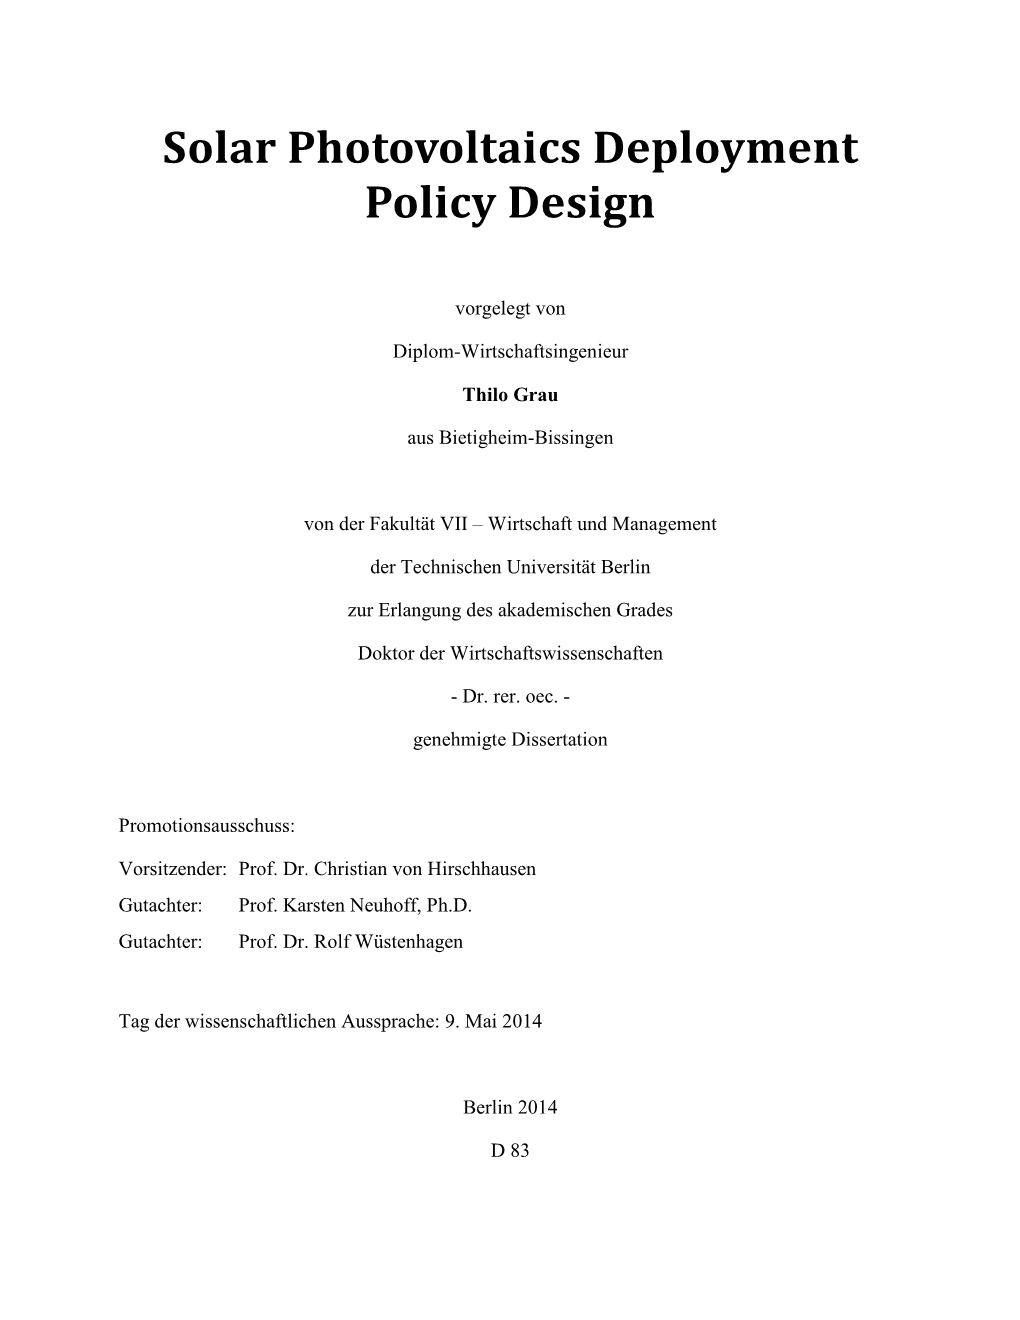 Solar Photovoltaics Deployment Policy Design